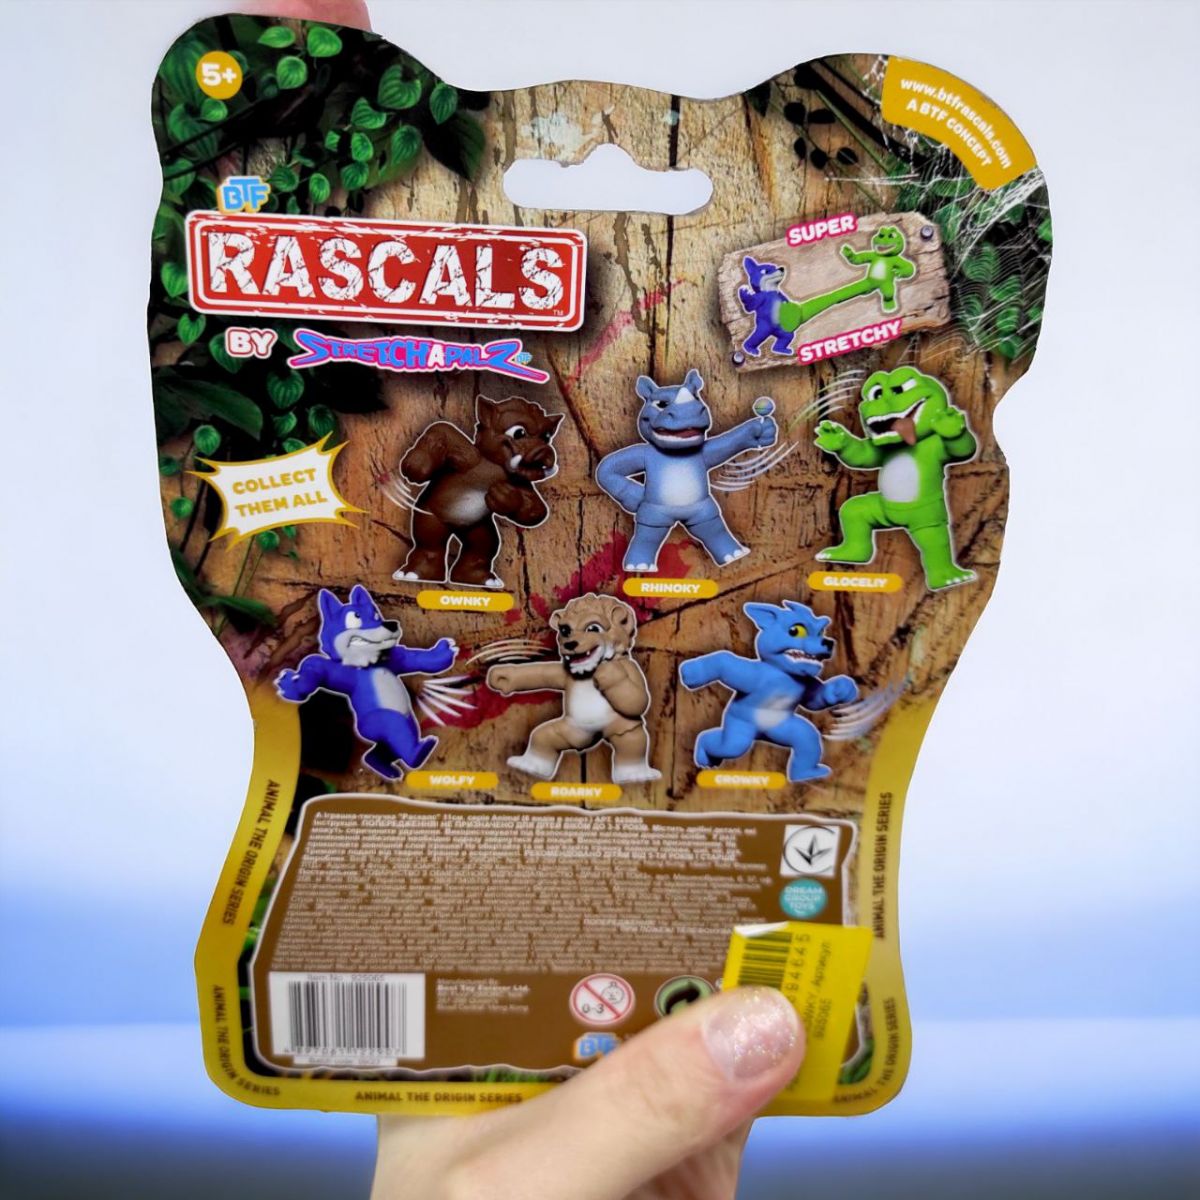 Іграшка-тягучка "Stretchapalz Rascals: Roarky"